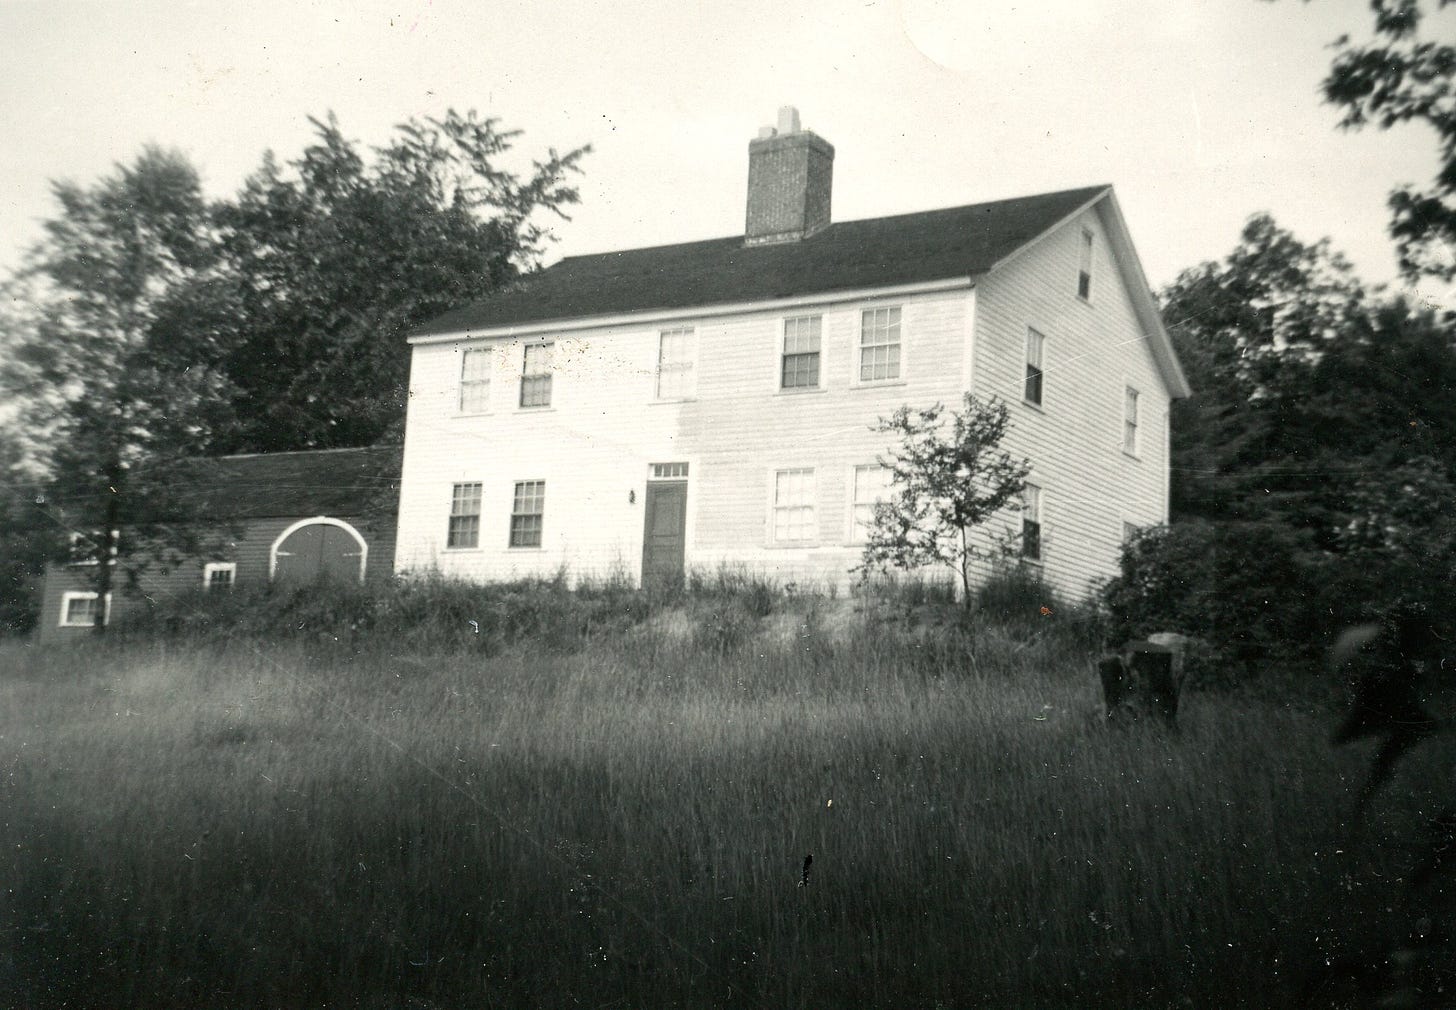 House and barn